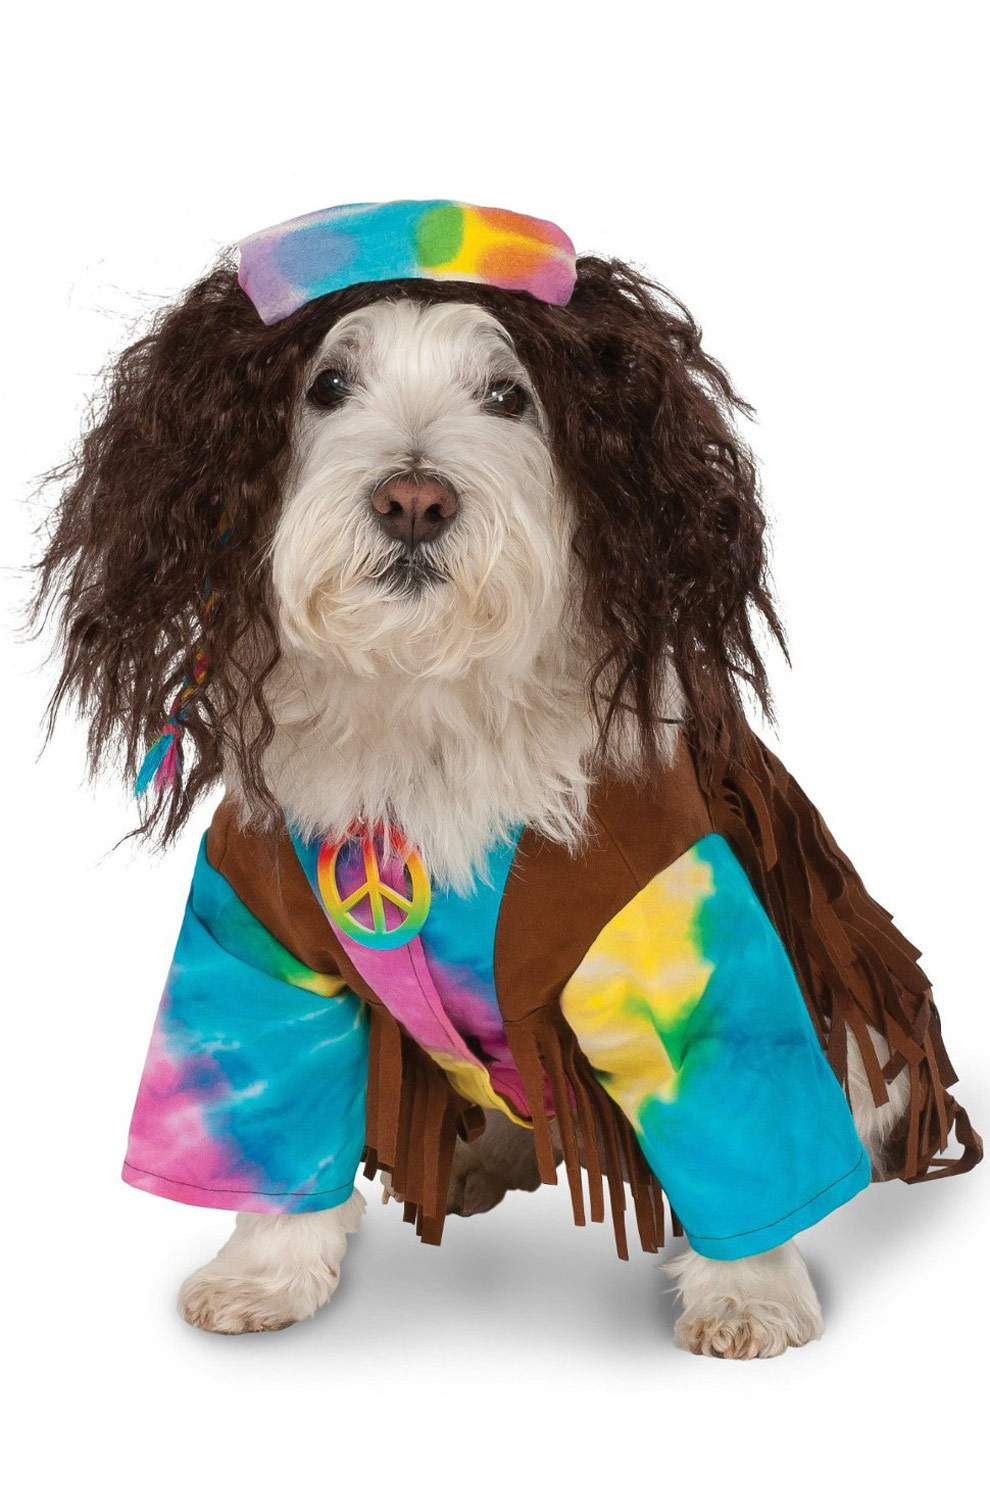 Hippie Pet Costume - image 1 of 2